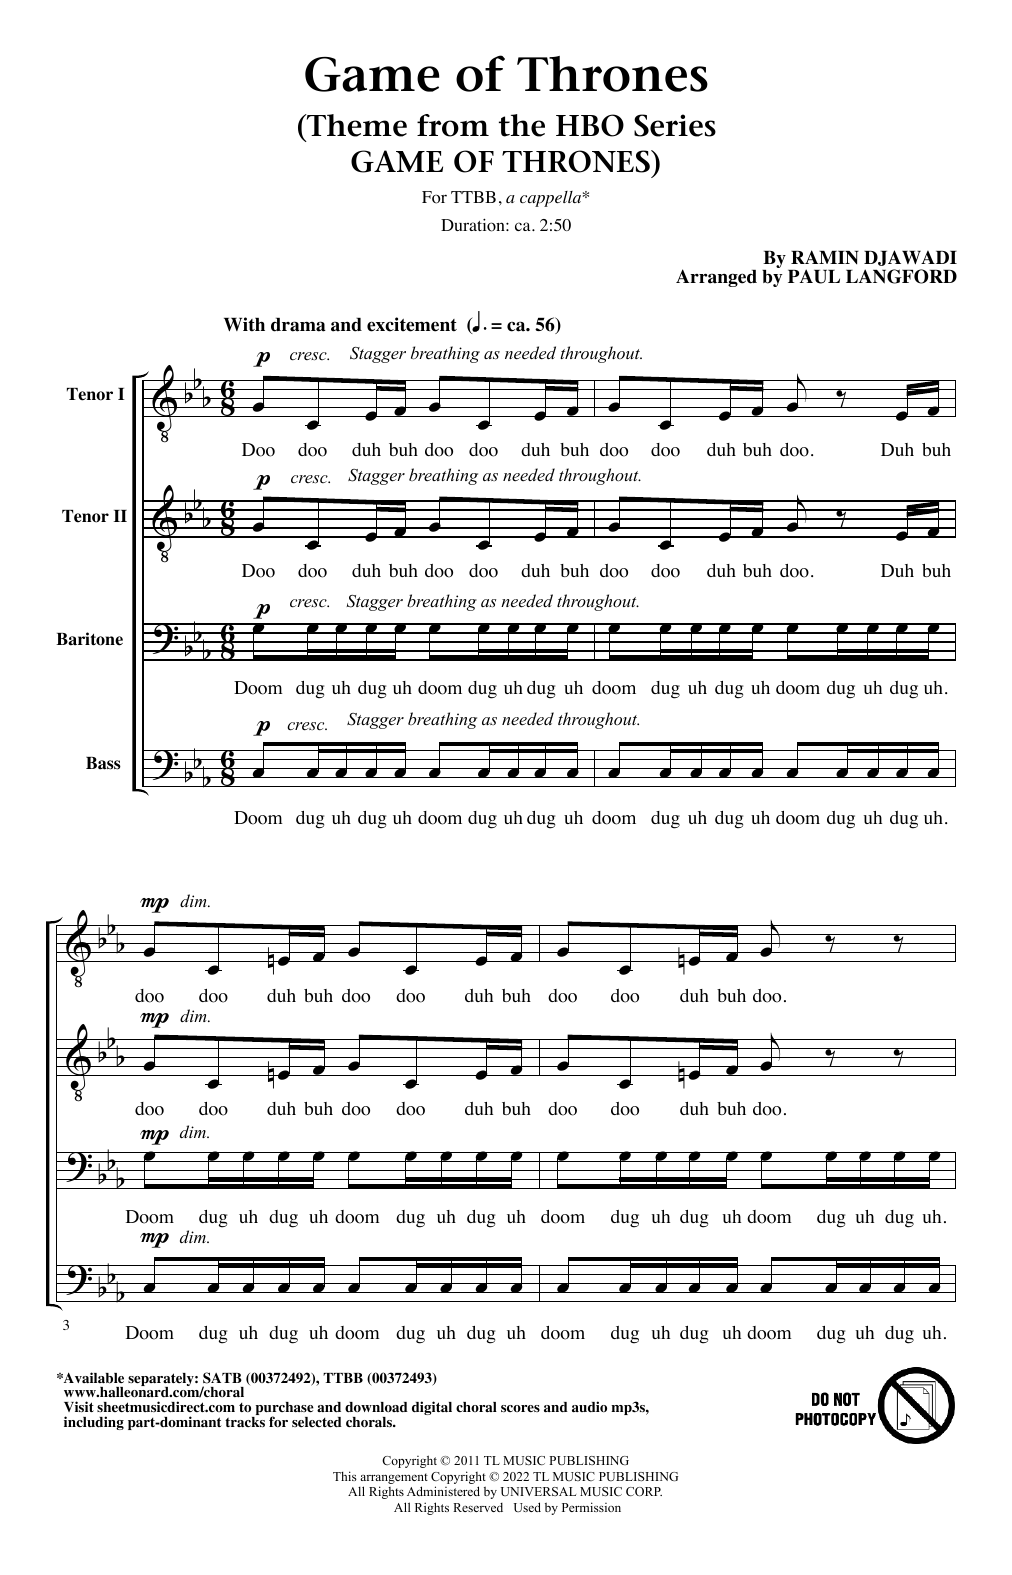 Ramin Djawadi Game Of Thrones (arr. Paul Langford) Sheet Music Notes & Chords for SATB Choir - Download or Print PDF